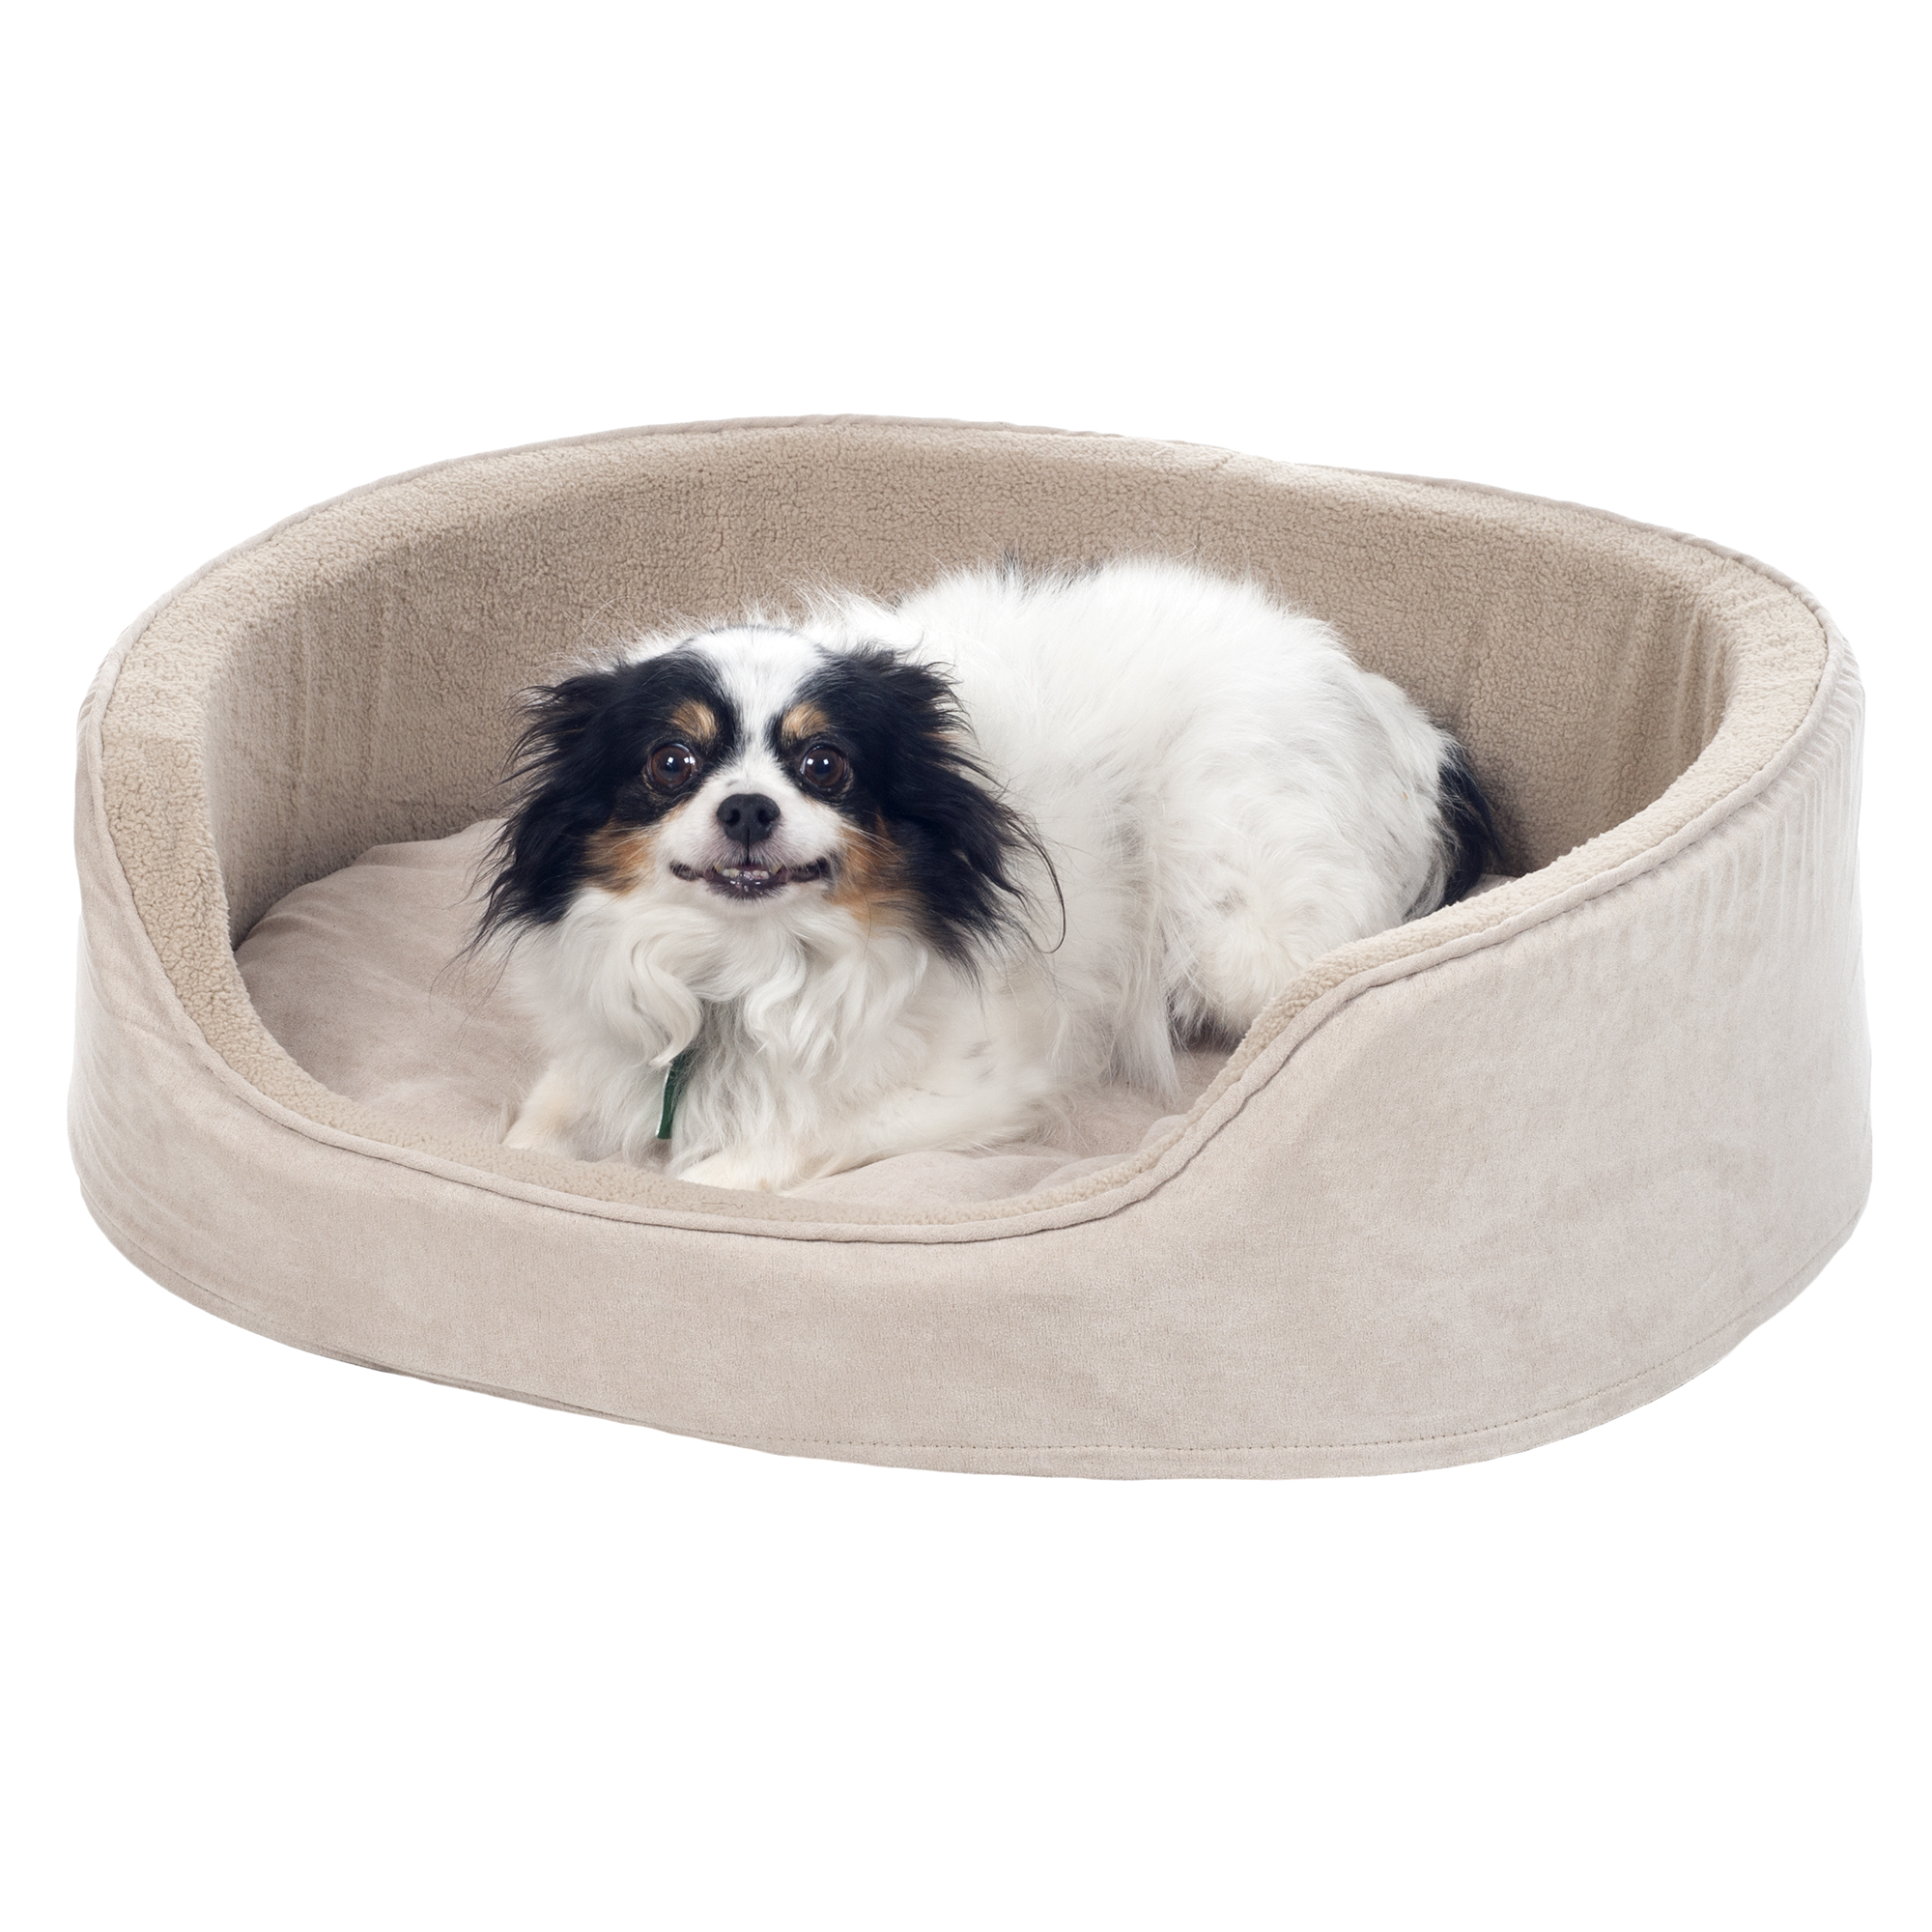 Paw Cuddle Round Suede Terry Pet Bed - Clay - Medium